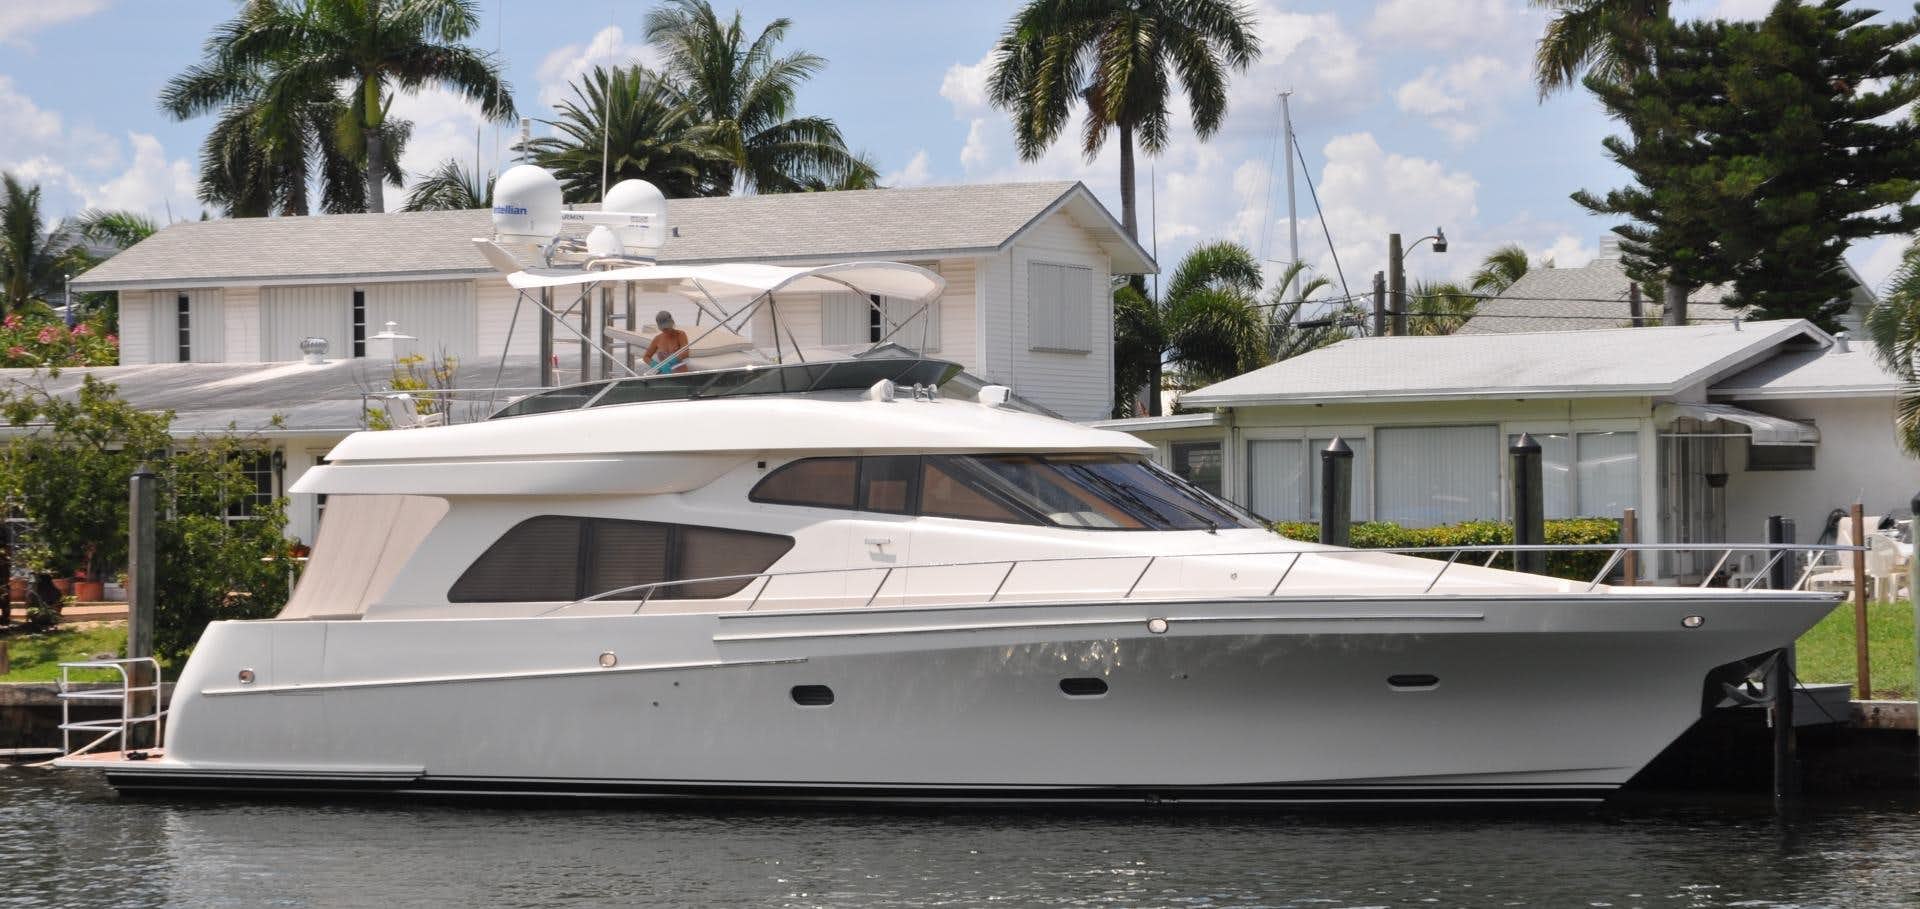 La linda vida
Yacht for Sale